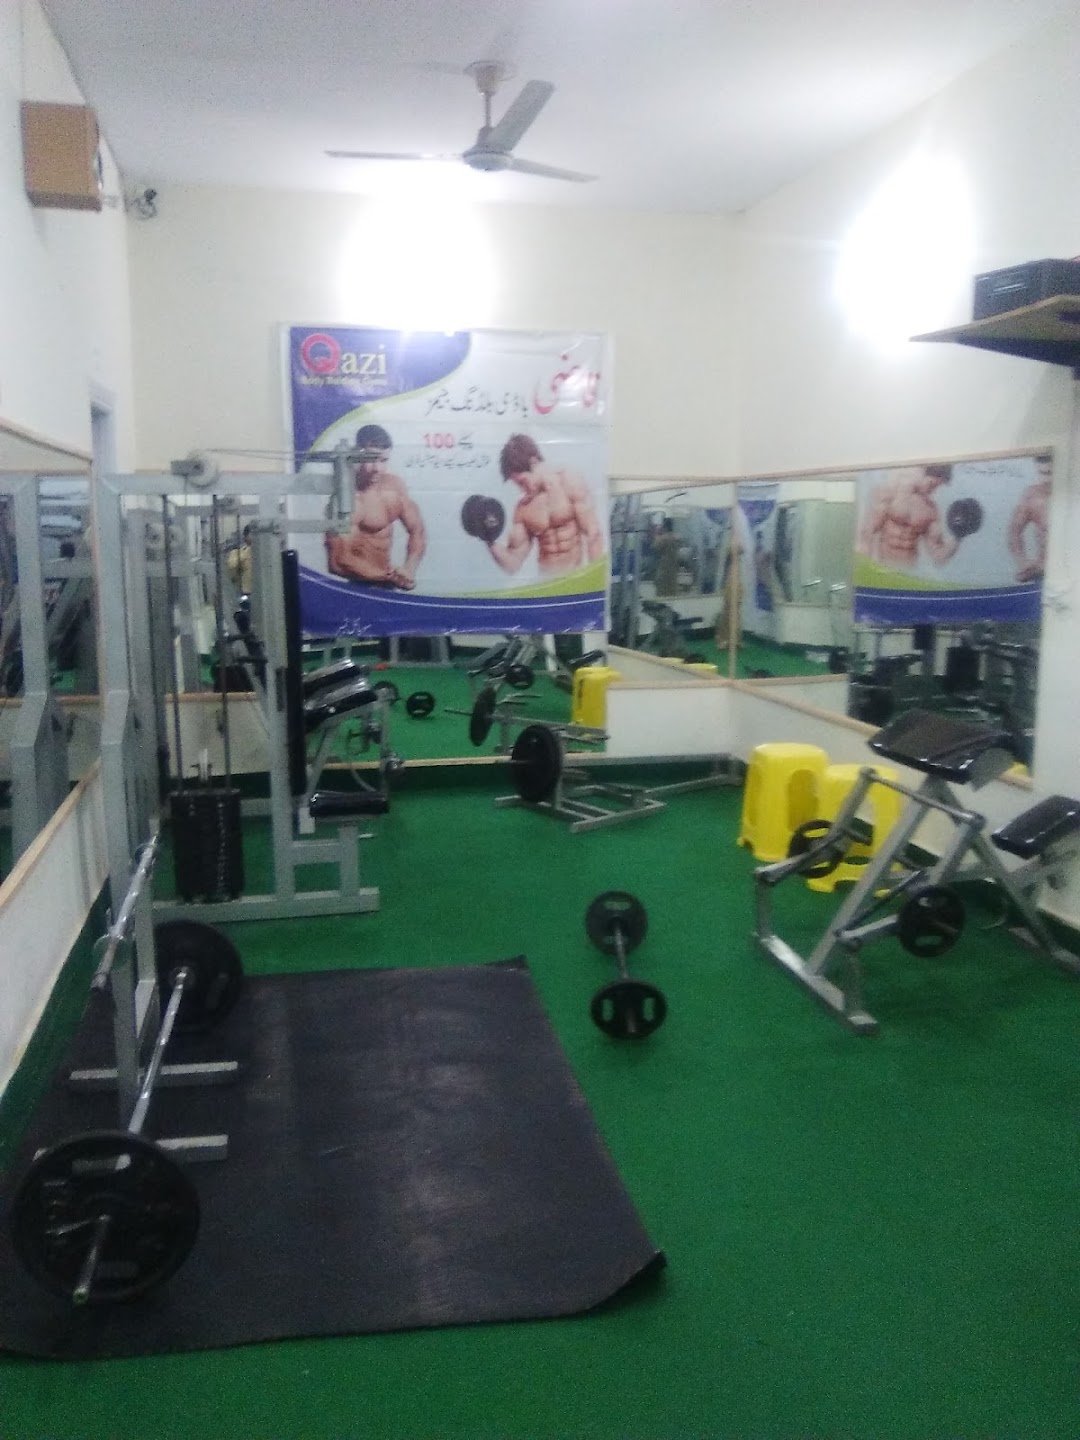 Qazi Bodybuilding Gym